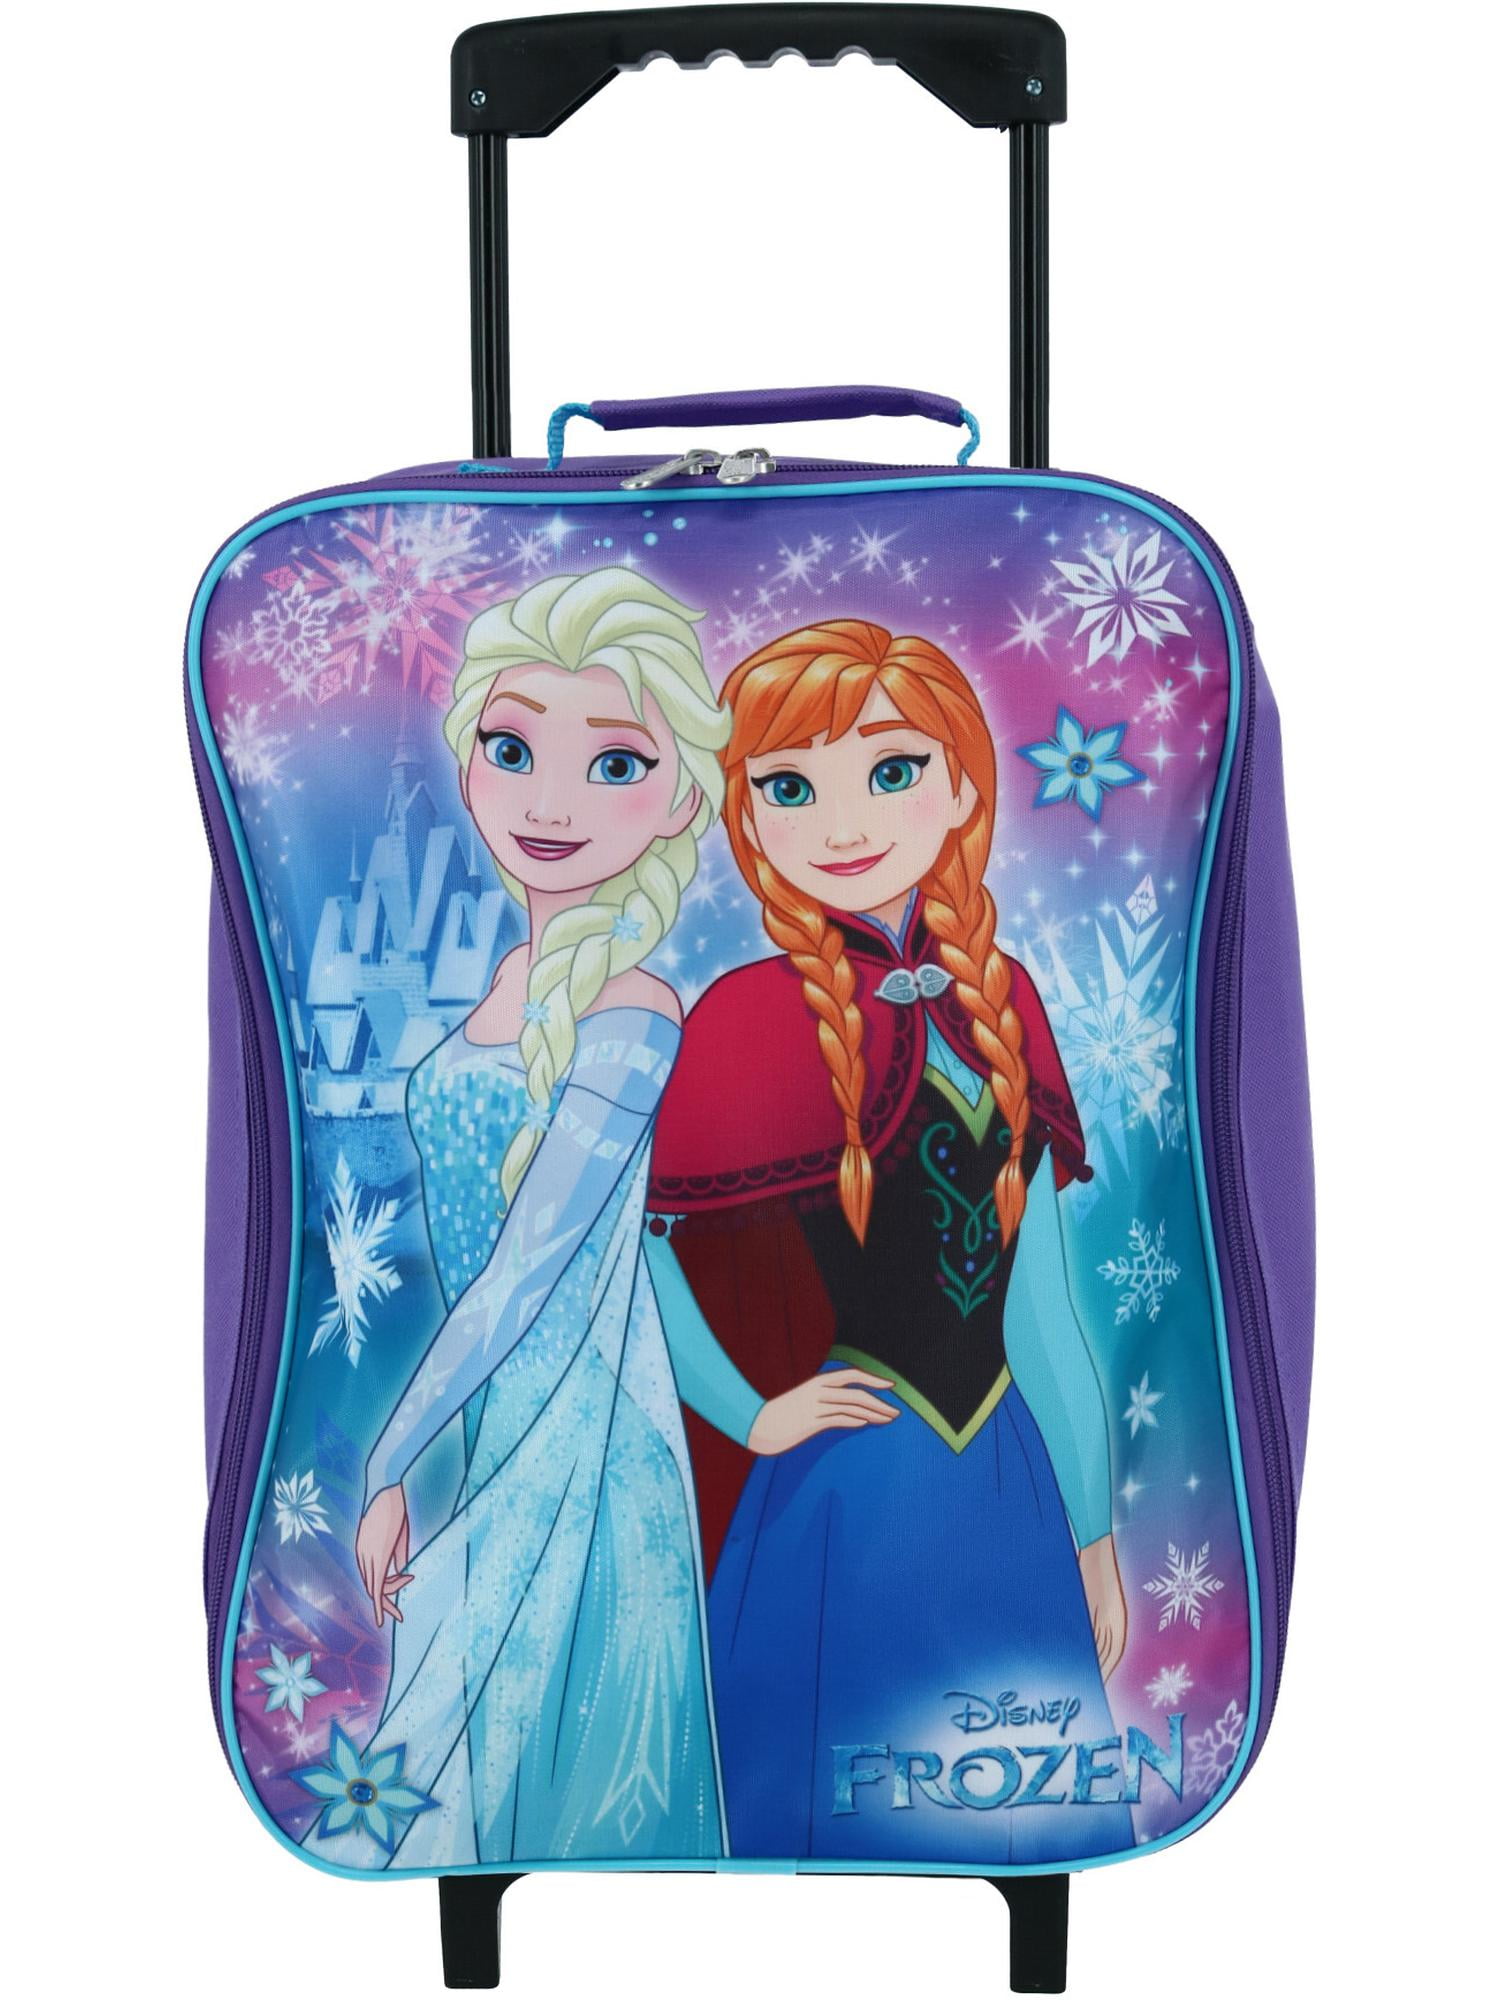 Disney - Disney Girl's Frozen Rolling Luggage - Walmart.com - Walmart.com